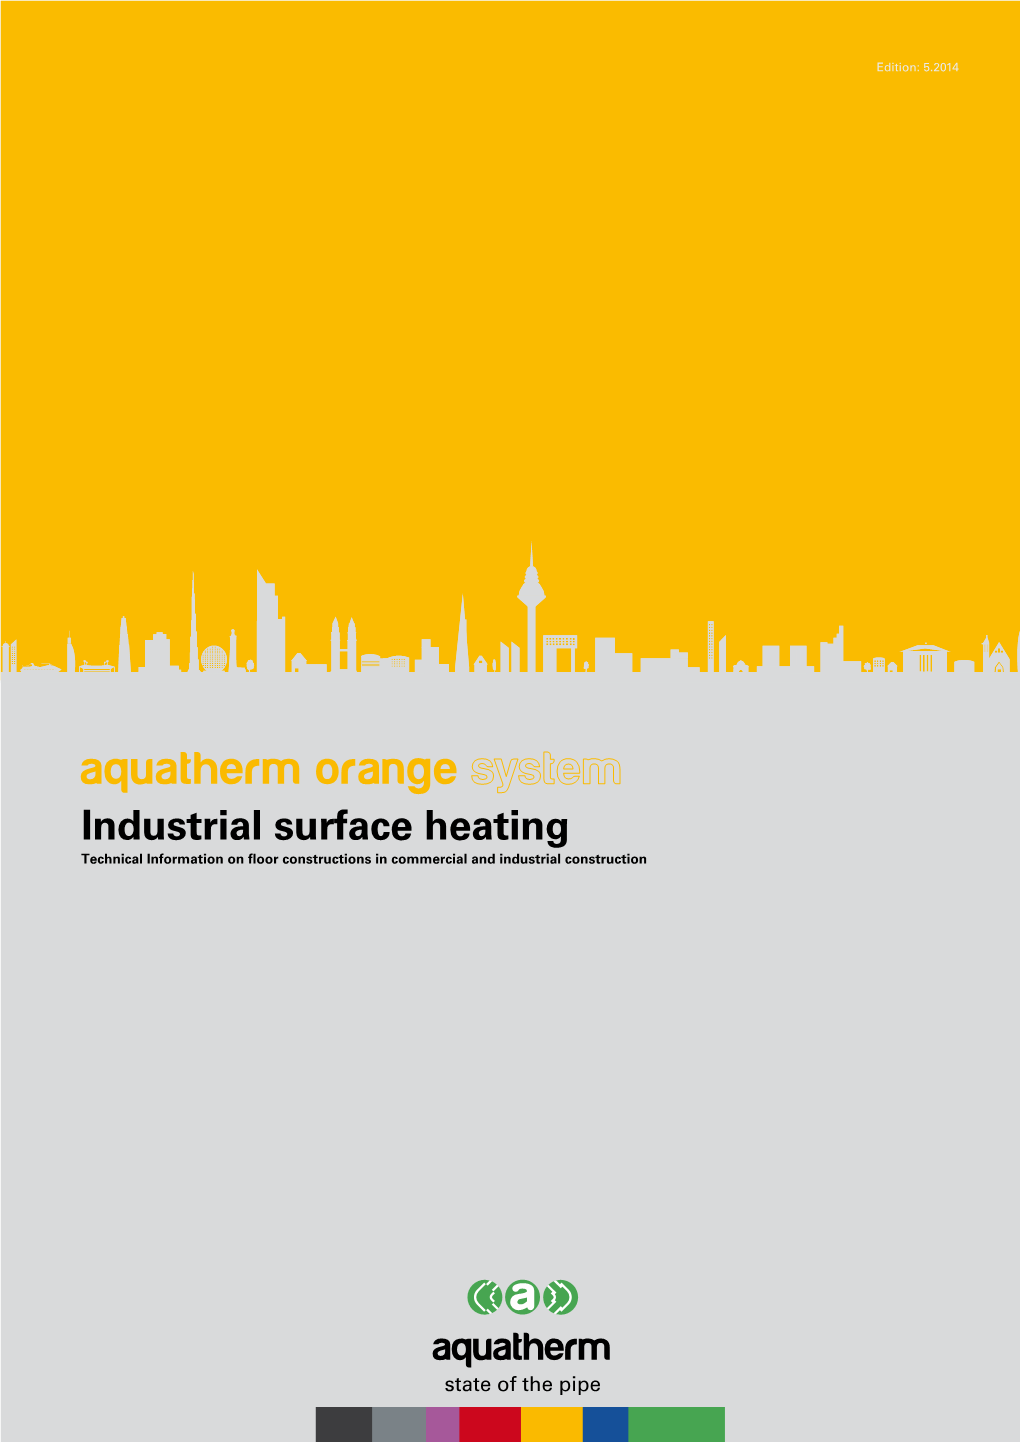 Aquatherm Orange System Industrial Surface Heating